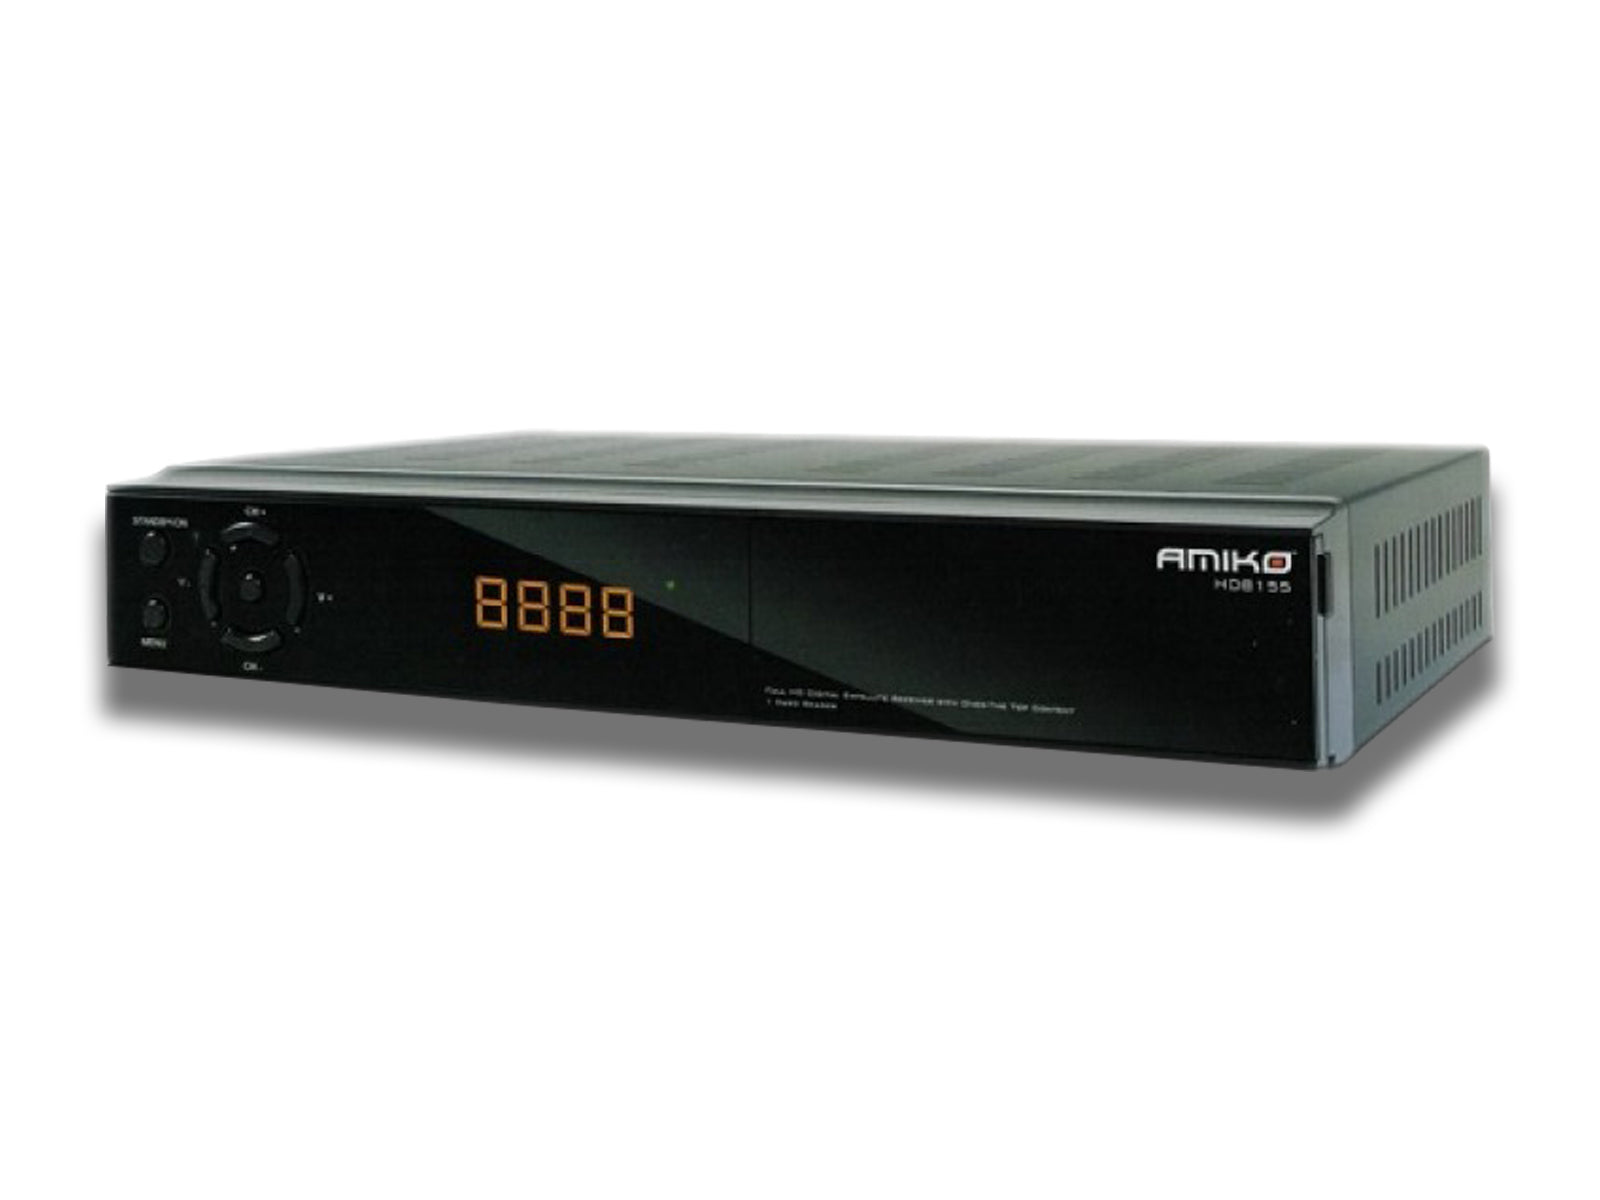 EDISION Picco T265 Full HD H.265 HEVC Terrestrial FTA Receiver T2, (1x  DVB-T2, USB, HDMI, SCART, S/PDIF, IR Eye, USB Support, 2-in-1 Remote  Control